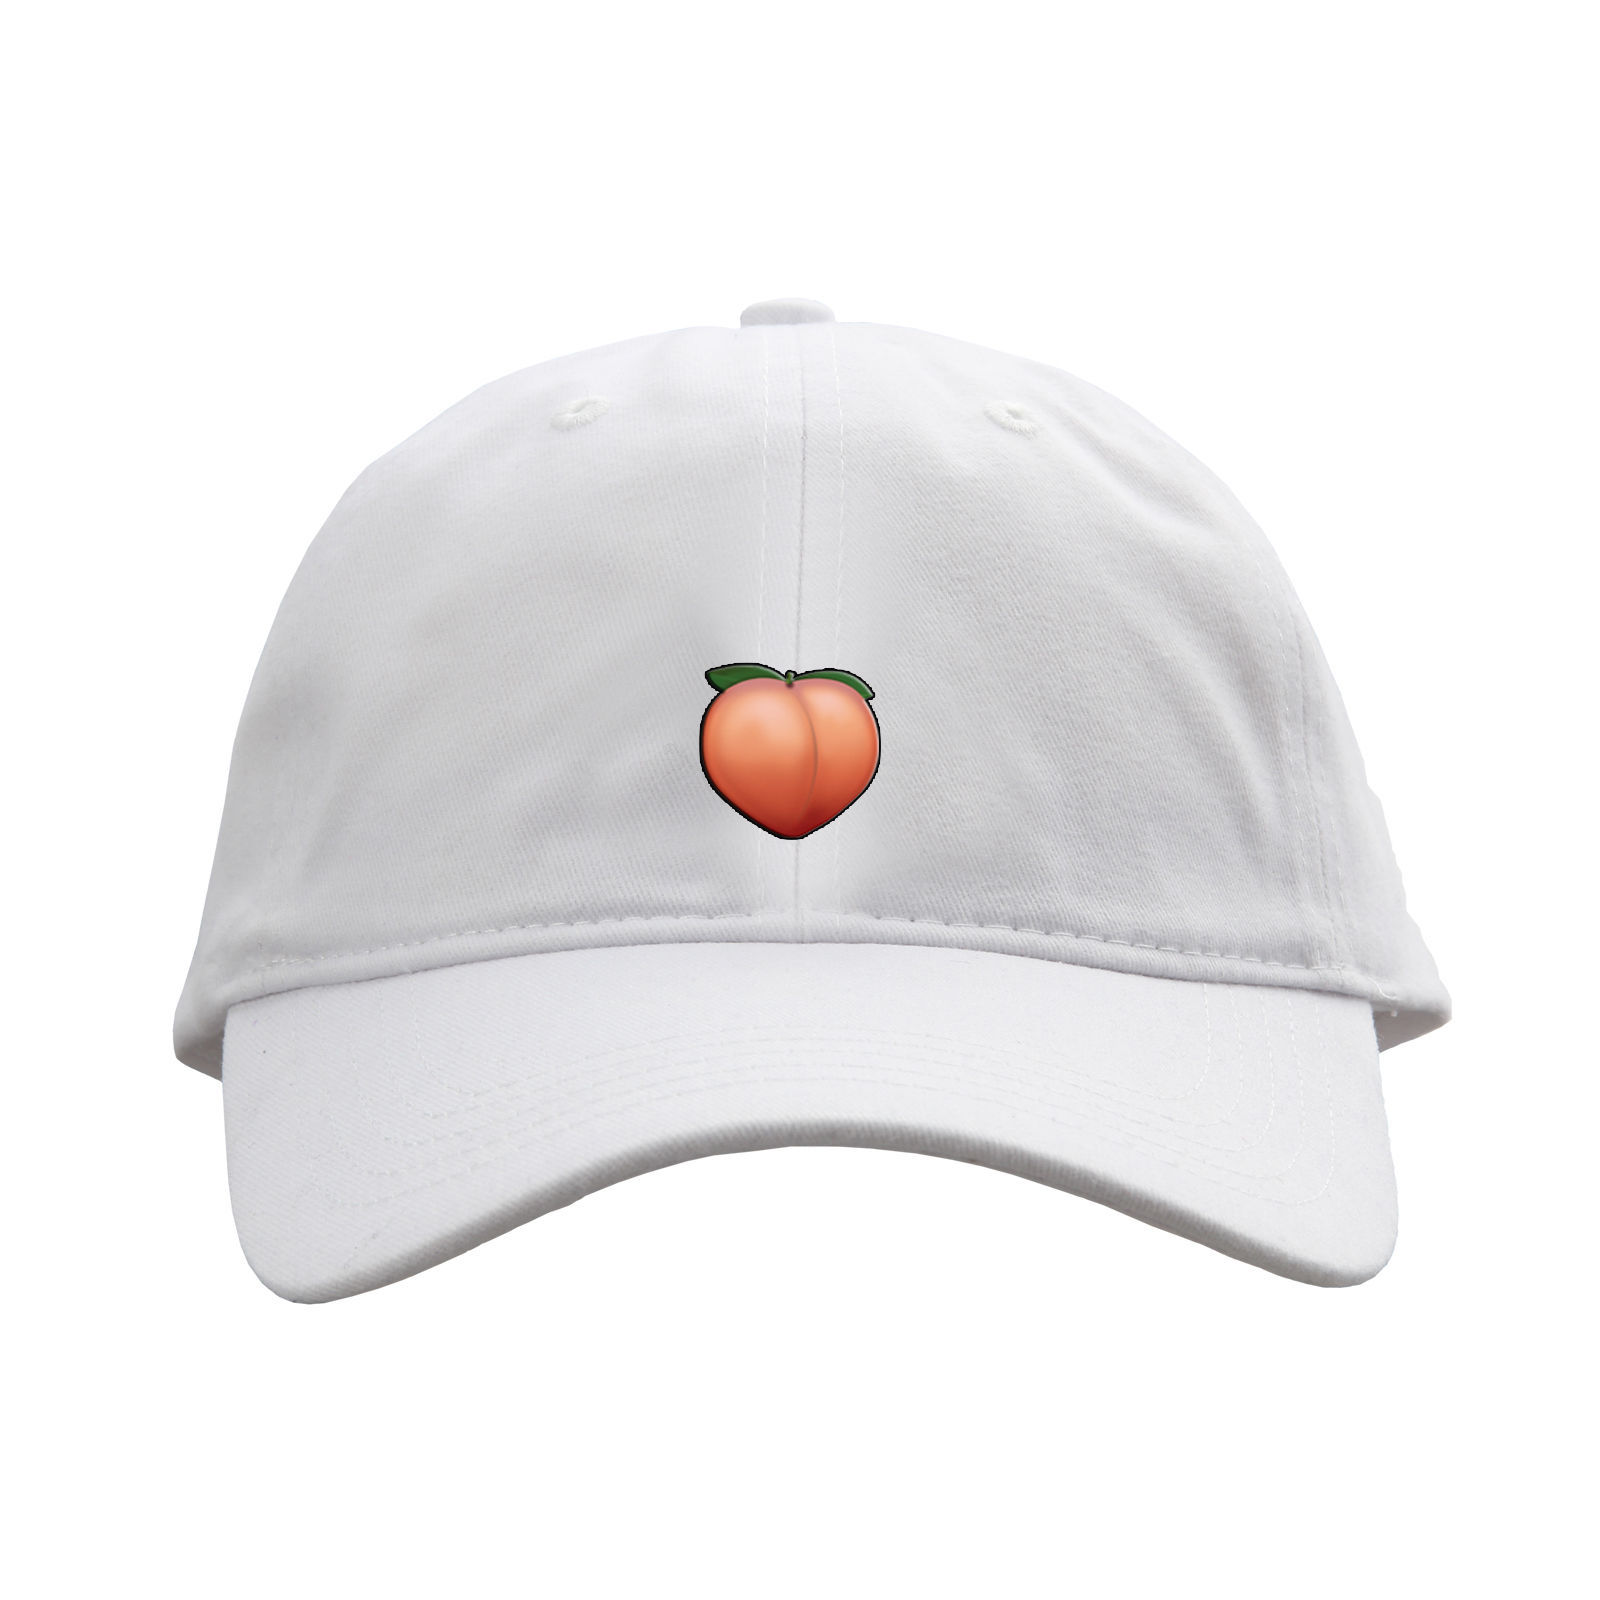 Peach Emoji Hat, Kimoji Strap Back Cap,Sweet & Juicy,Adjustable,Dope ...